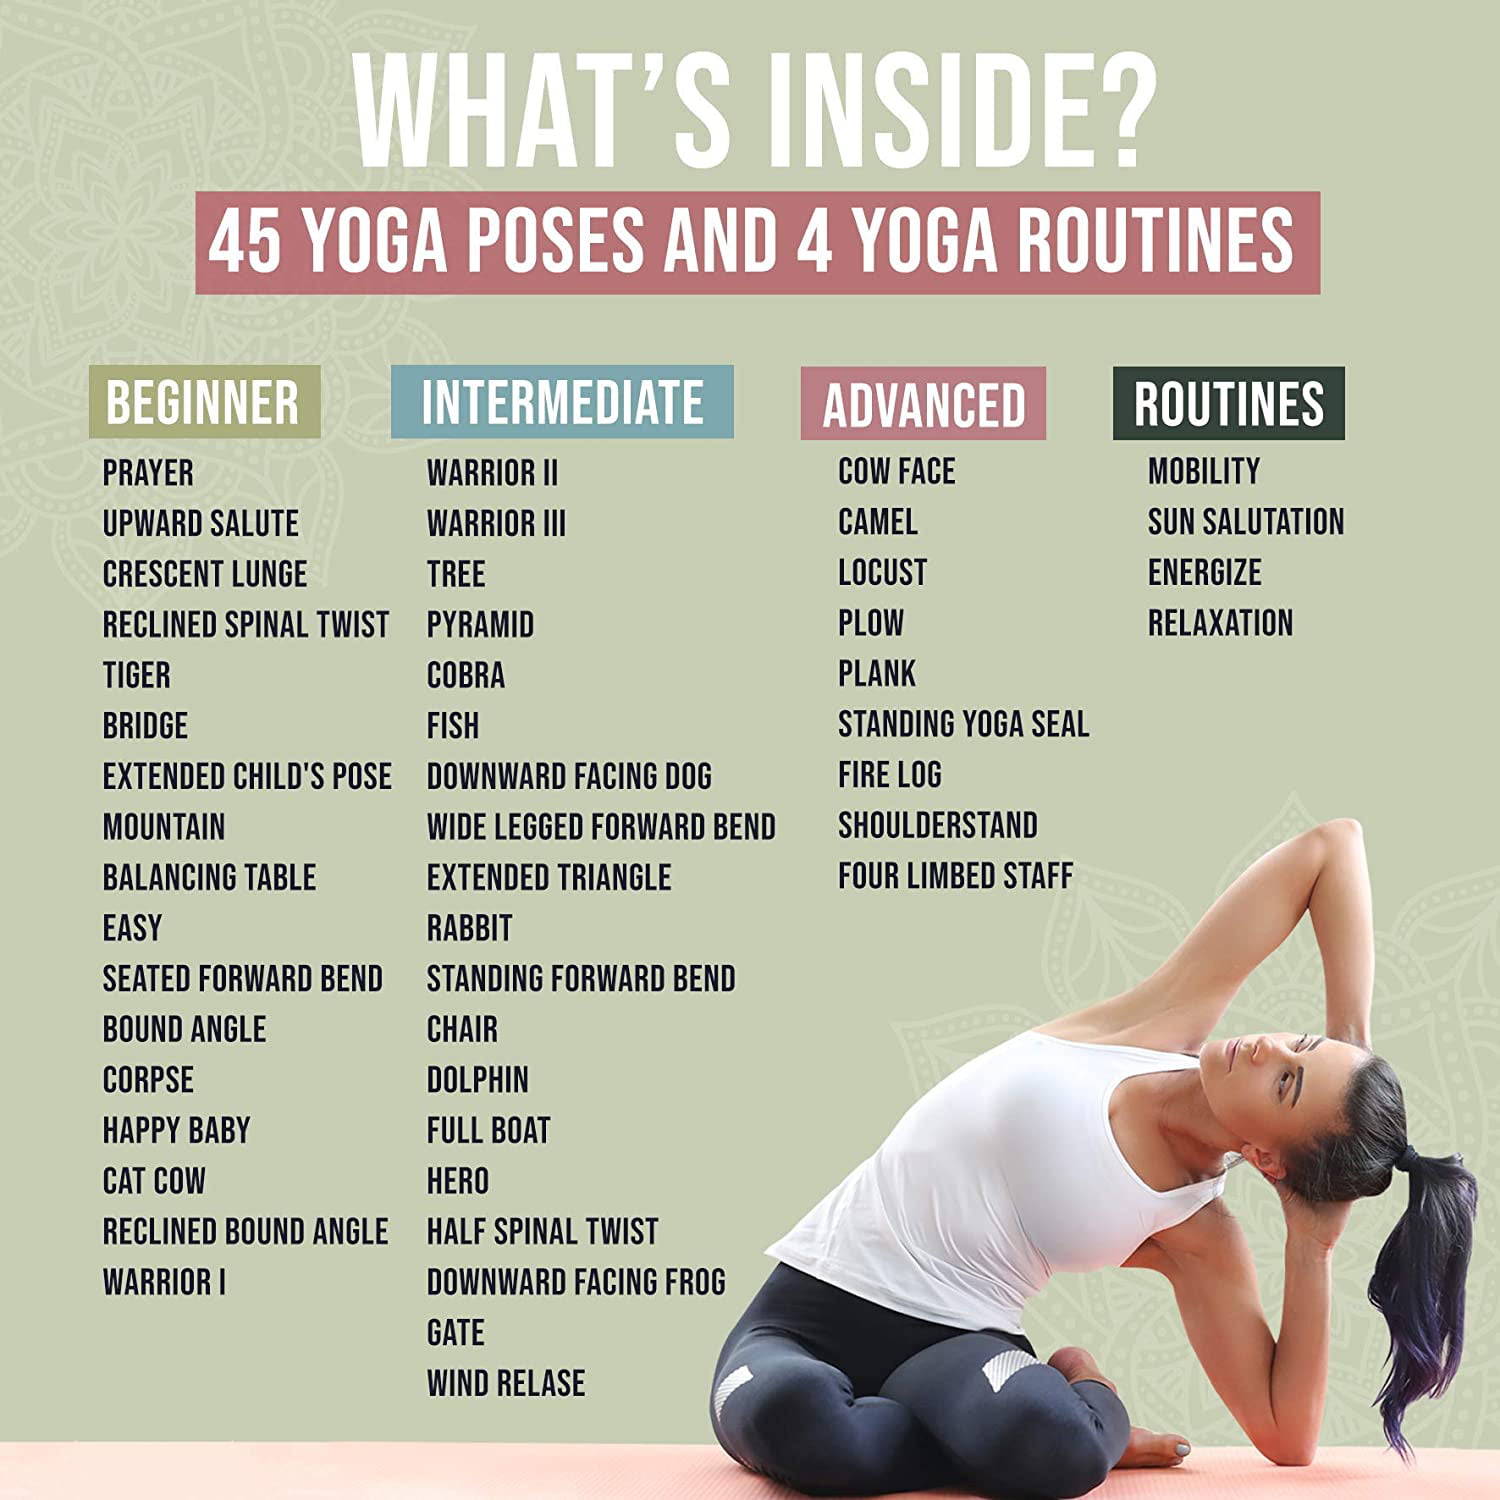 Yoga Asana Flash Cards | books on yoga poses | printed/digital yoga book